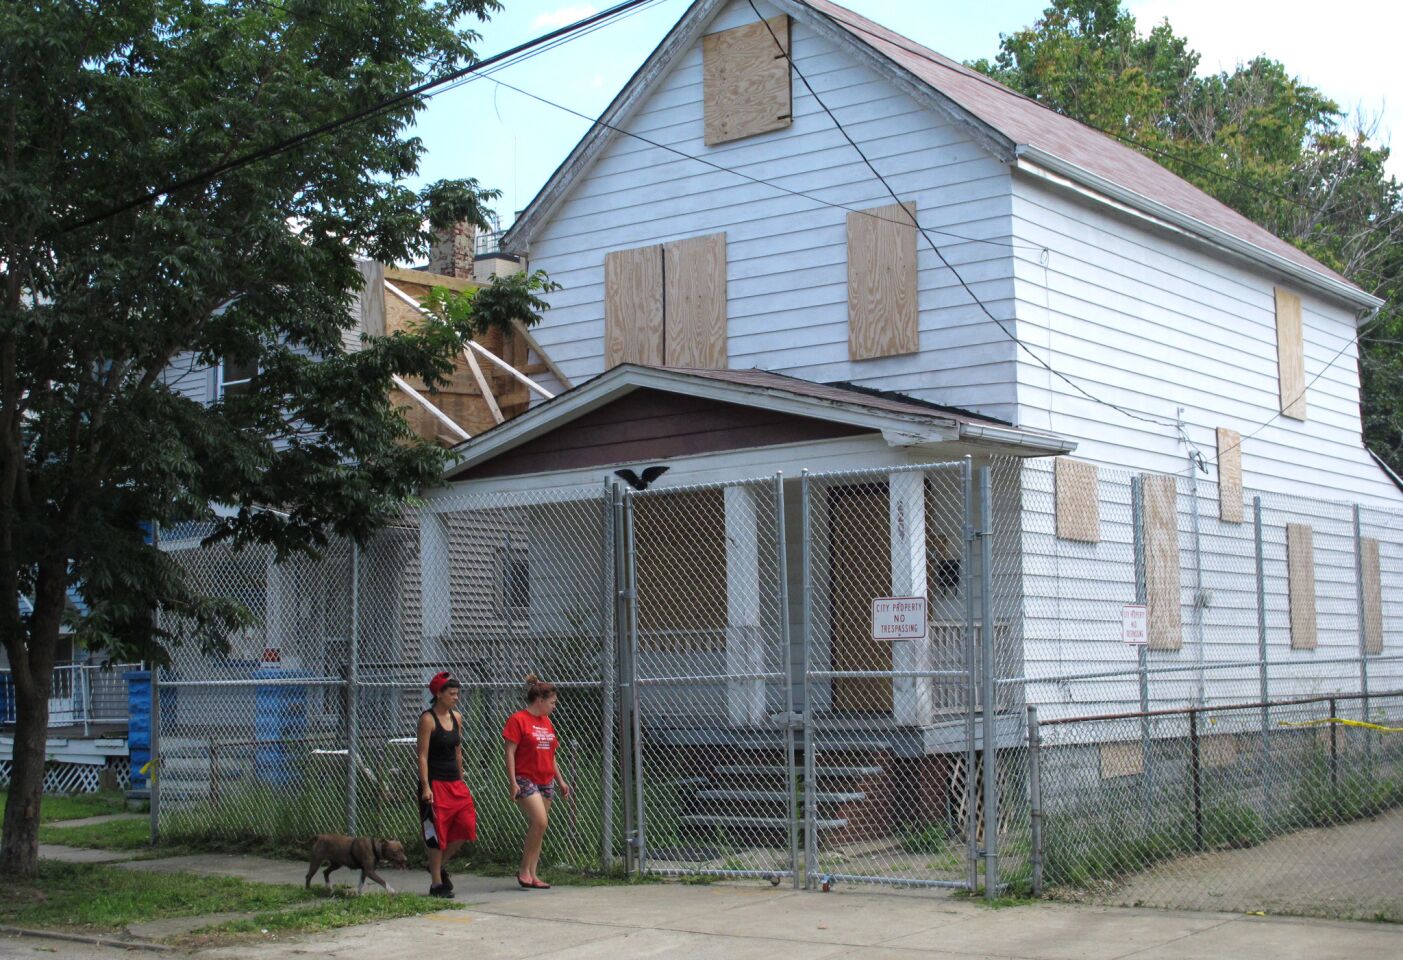 Ariel Castro's home in Cleveland